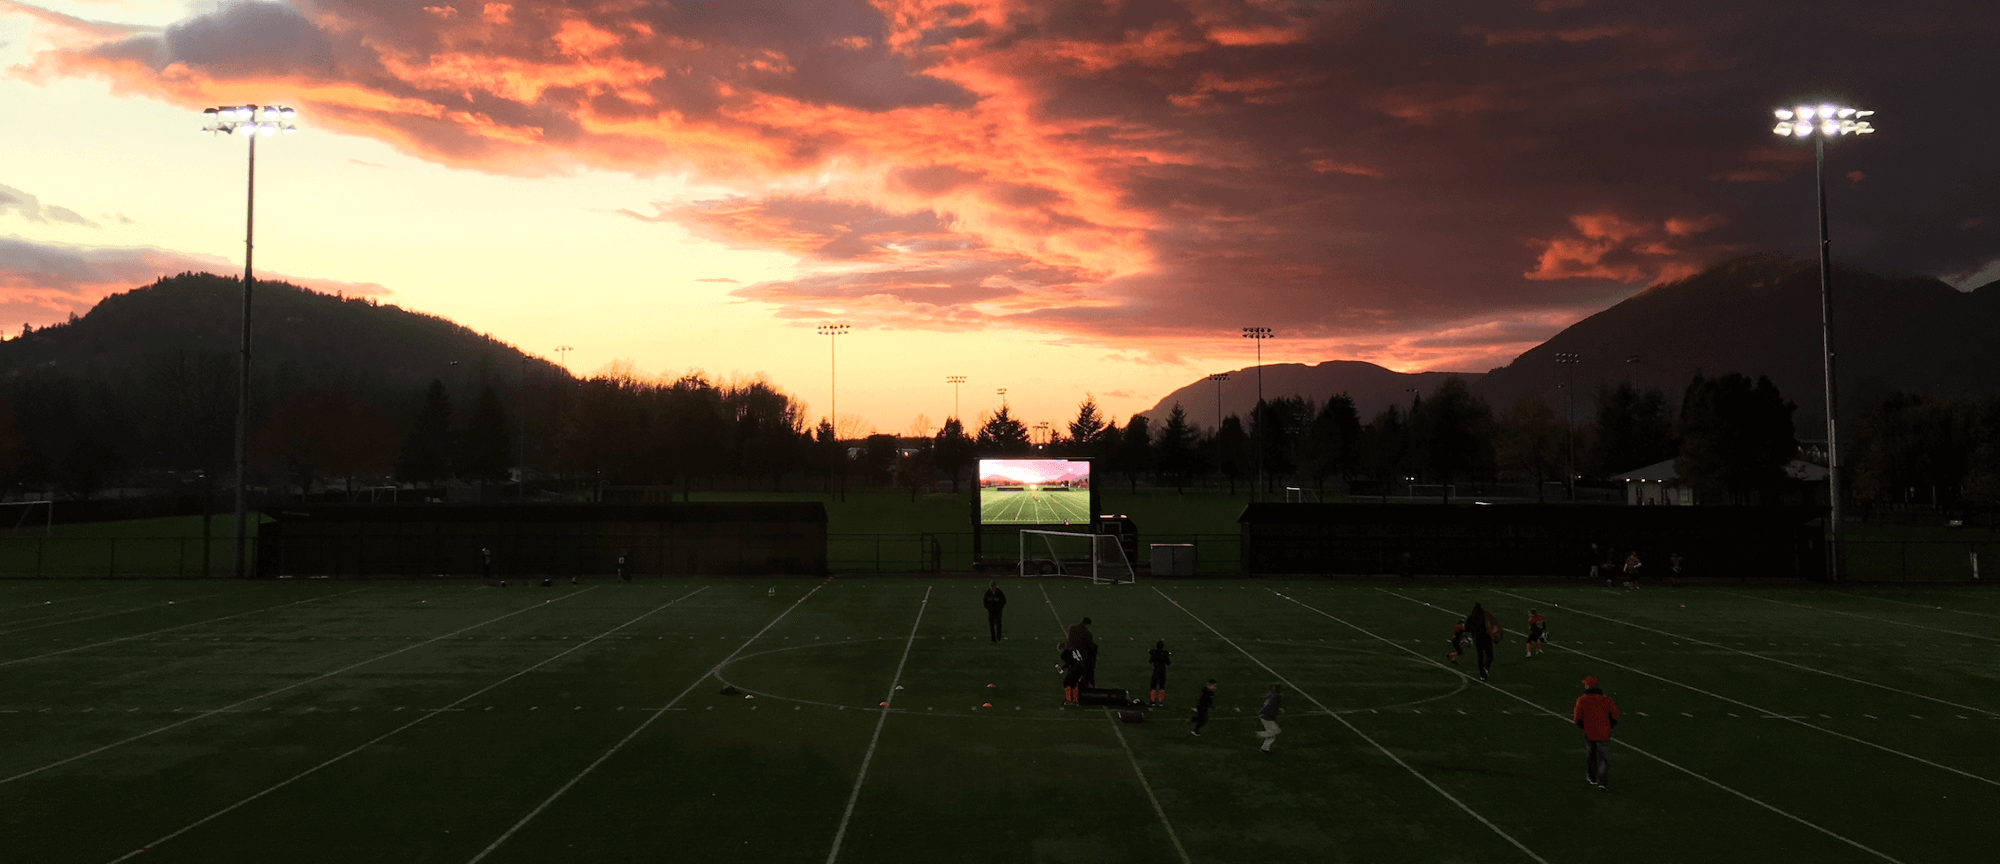 Футбольное поле на фоне гор и заката солнца